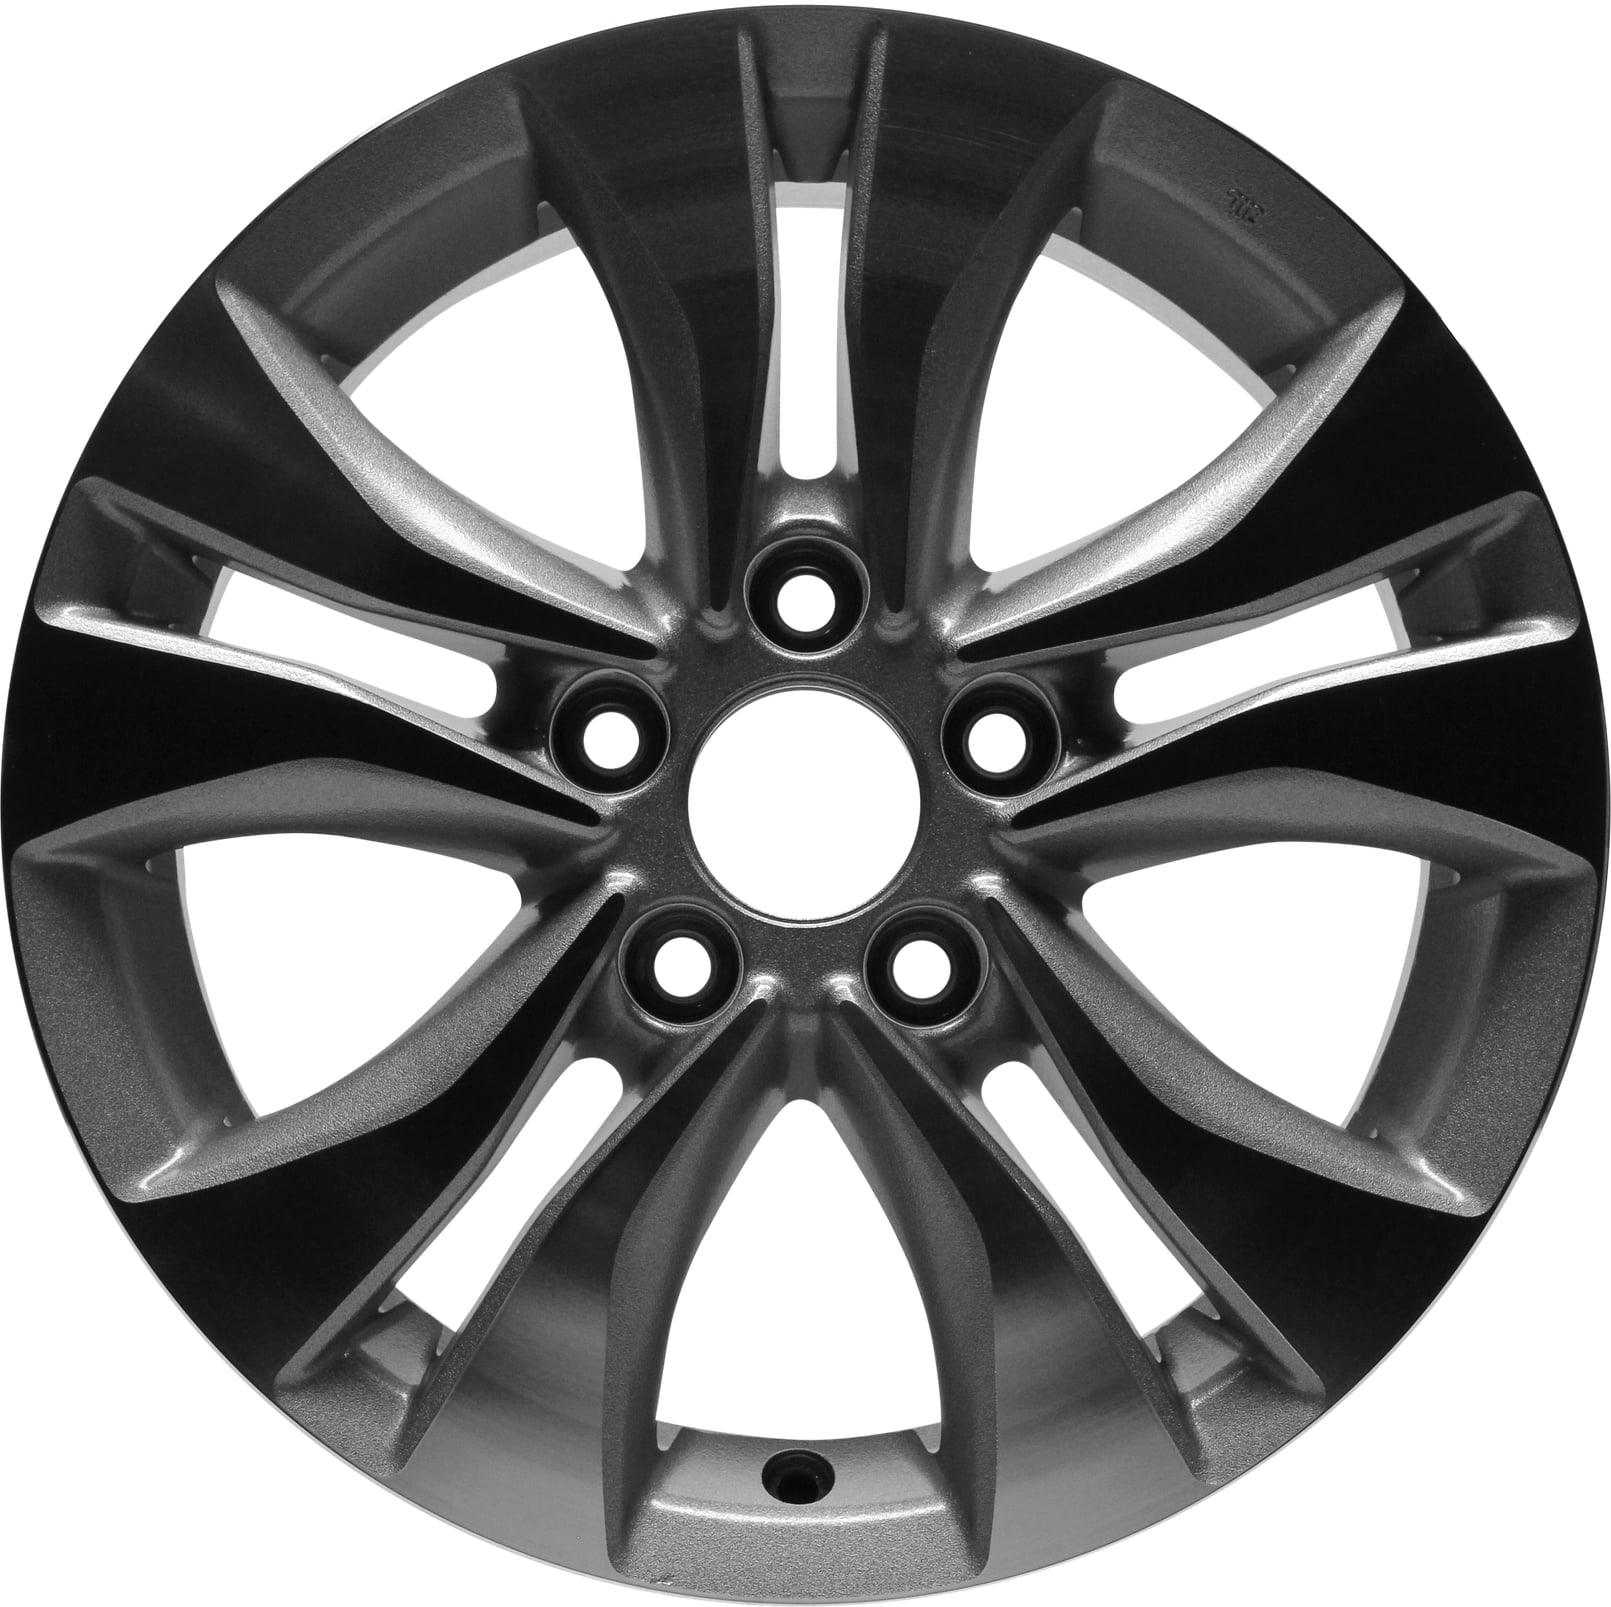 16 Inch Aluminum Wheel Rim For 13 15 Honda Accord 5 Lug Tire Fits R16 Walmart Com Walmart Com